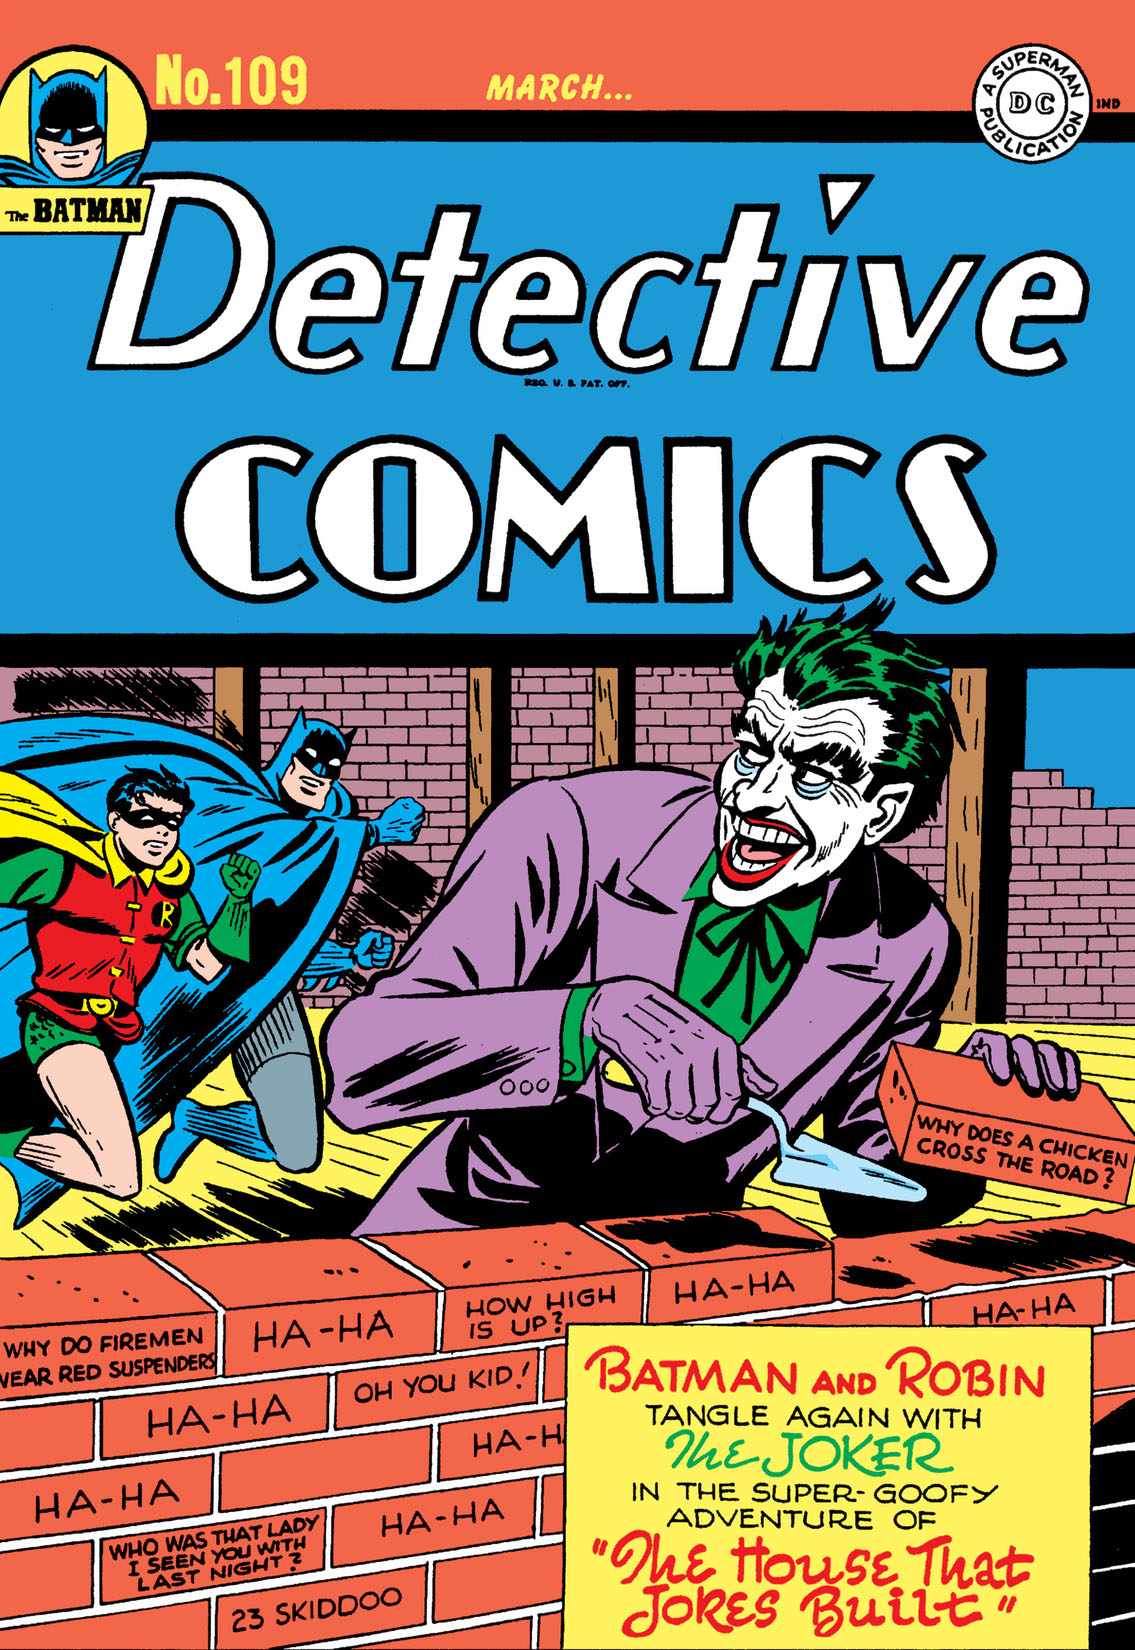 Detective Comics (1937-) #109 preview images